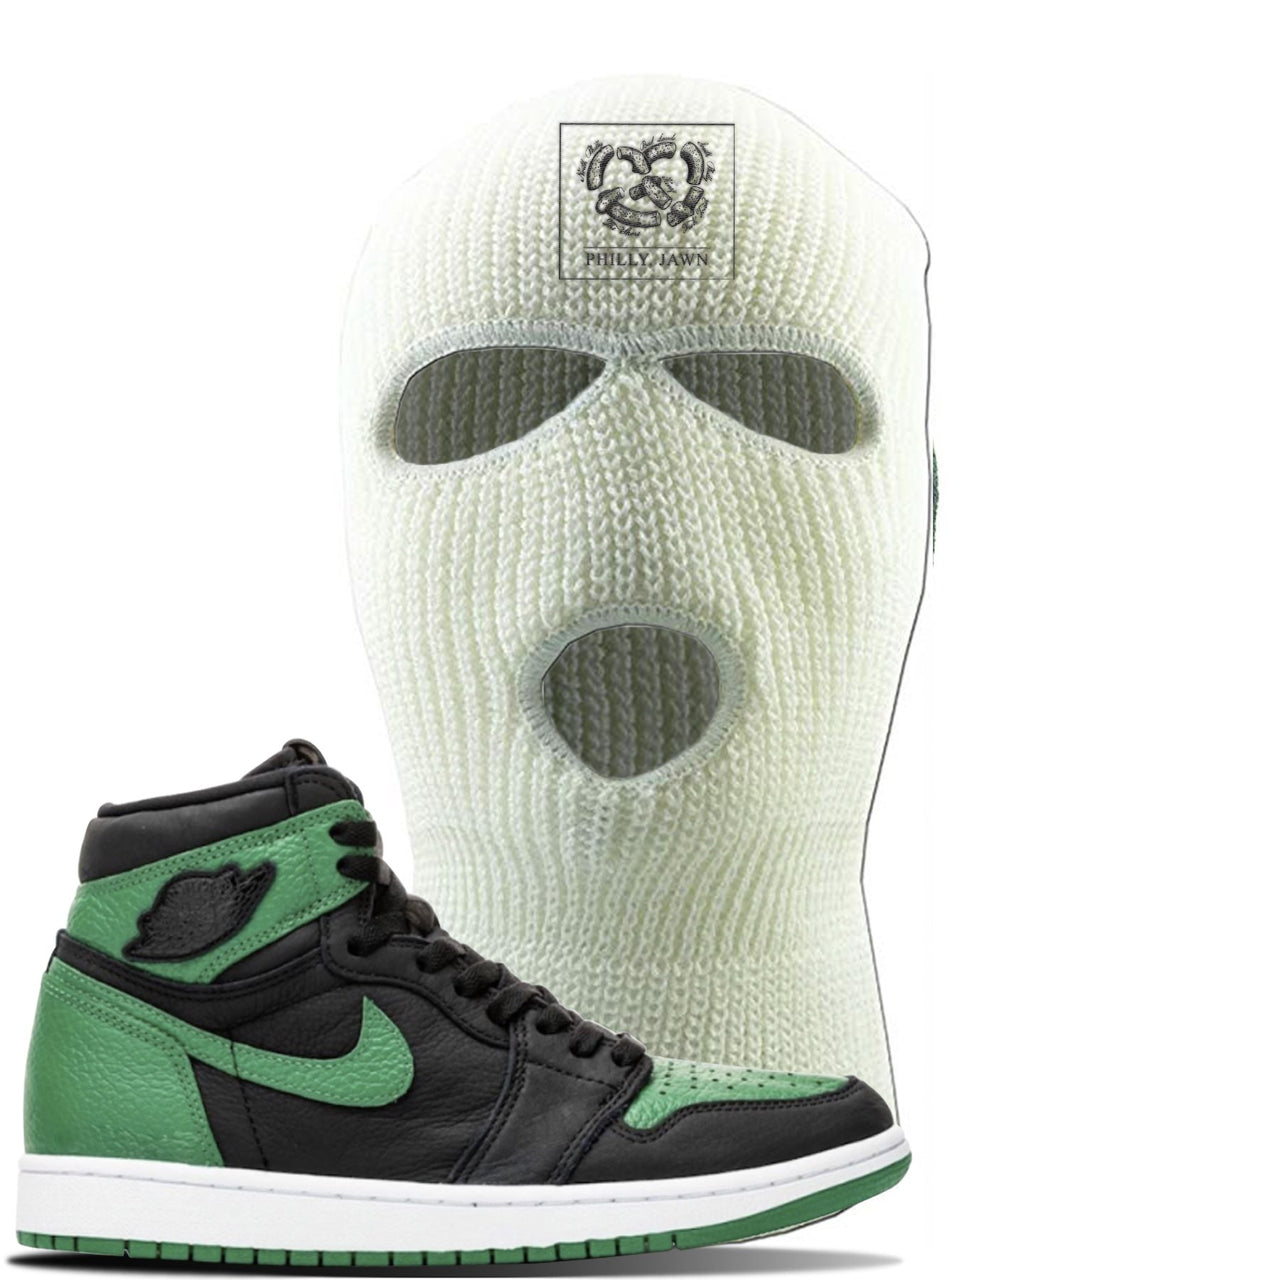 Jordan 1 Retro High OG Pine Green Gym Sneaker White Ski Mask | Hat to match Air Jordan 1 Retro High OG Pine Green Gym Shoes | Philly Pretzel